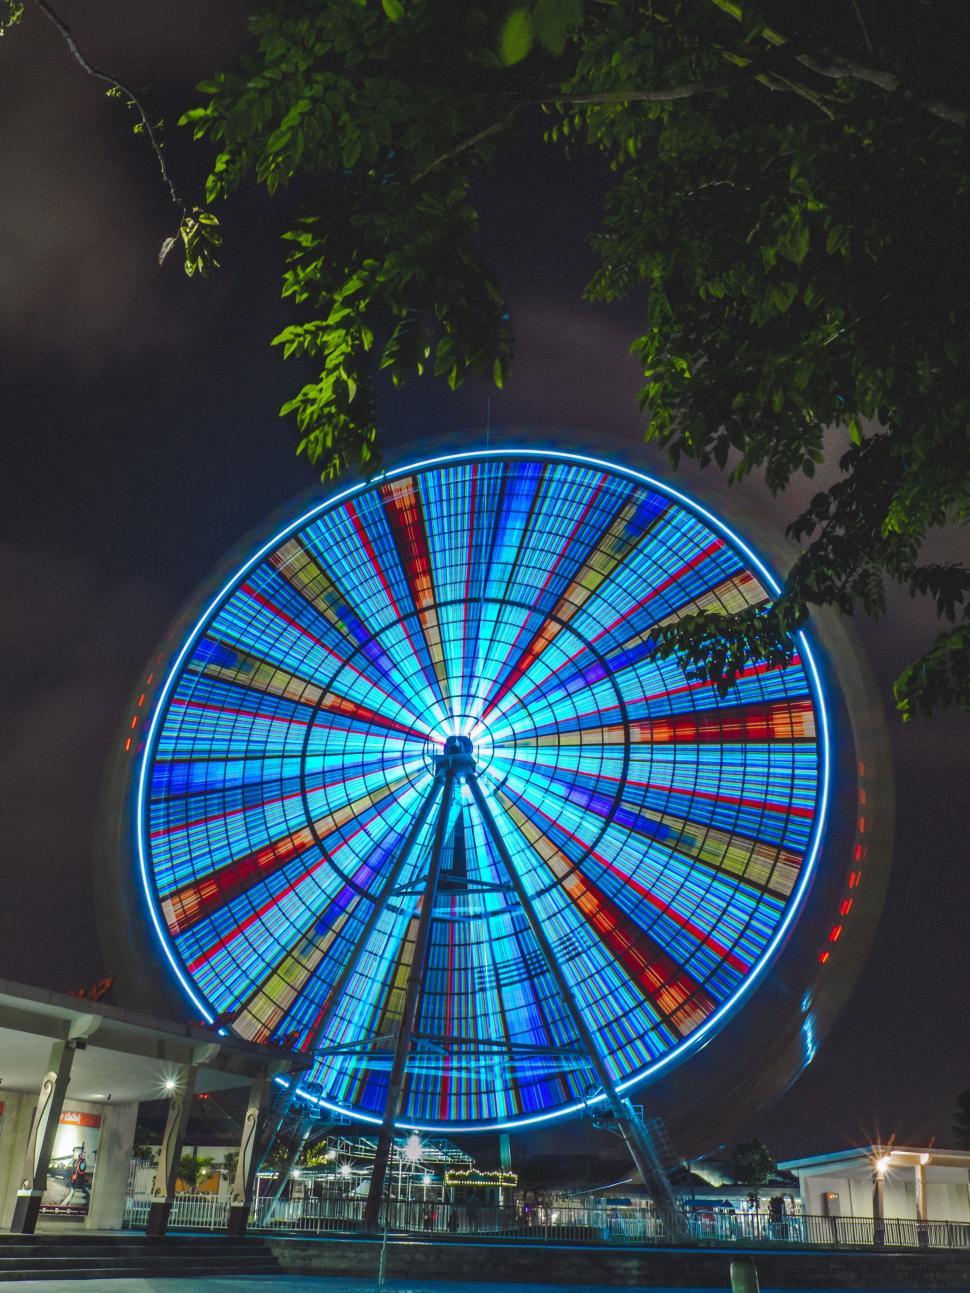 Free Image of Illuminated Ferris Wheel Glowing in the Night Sky 